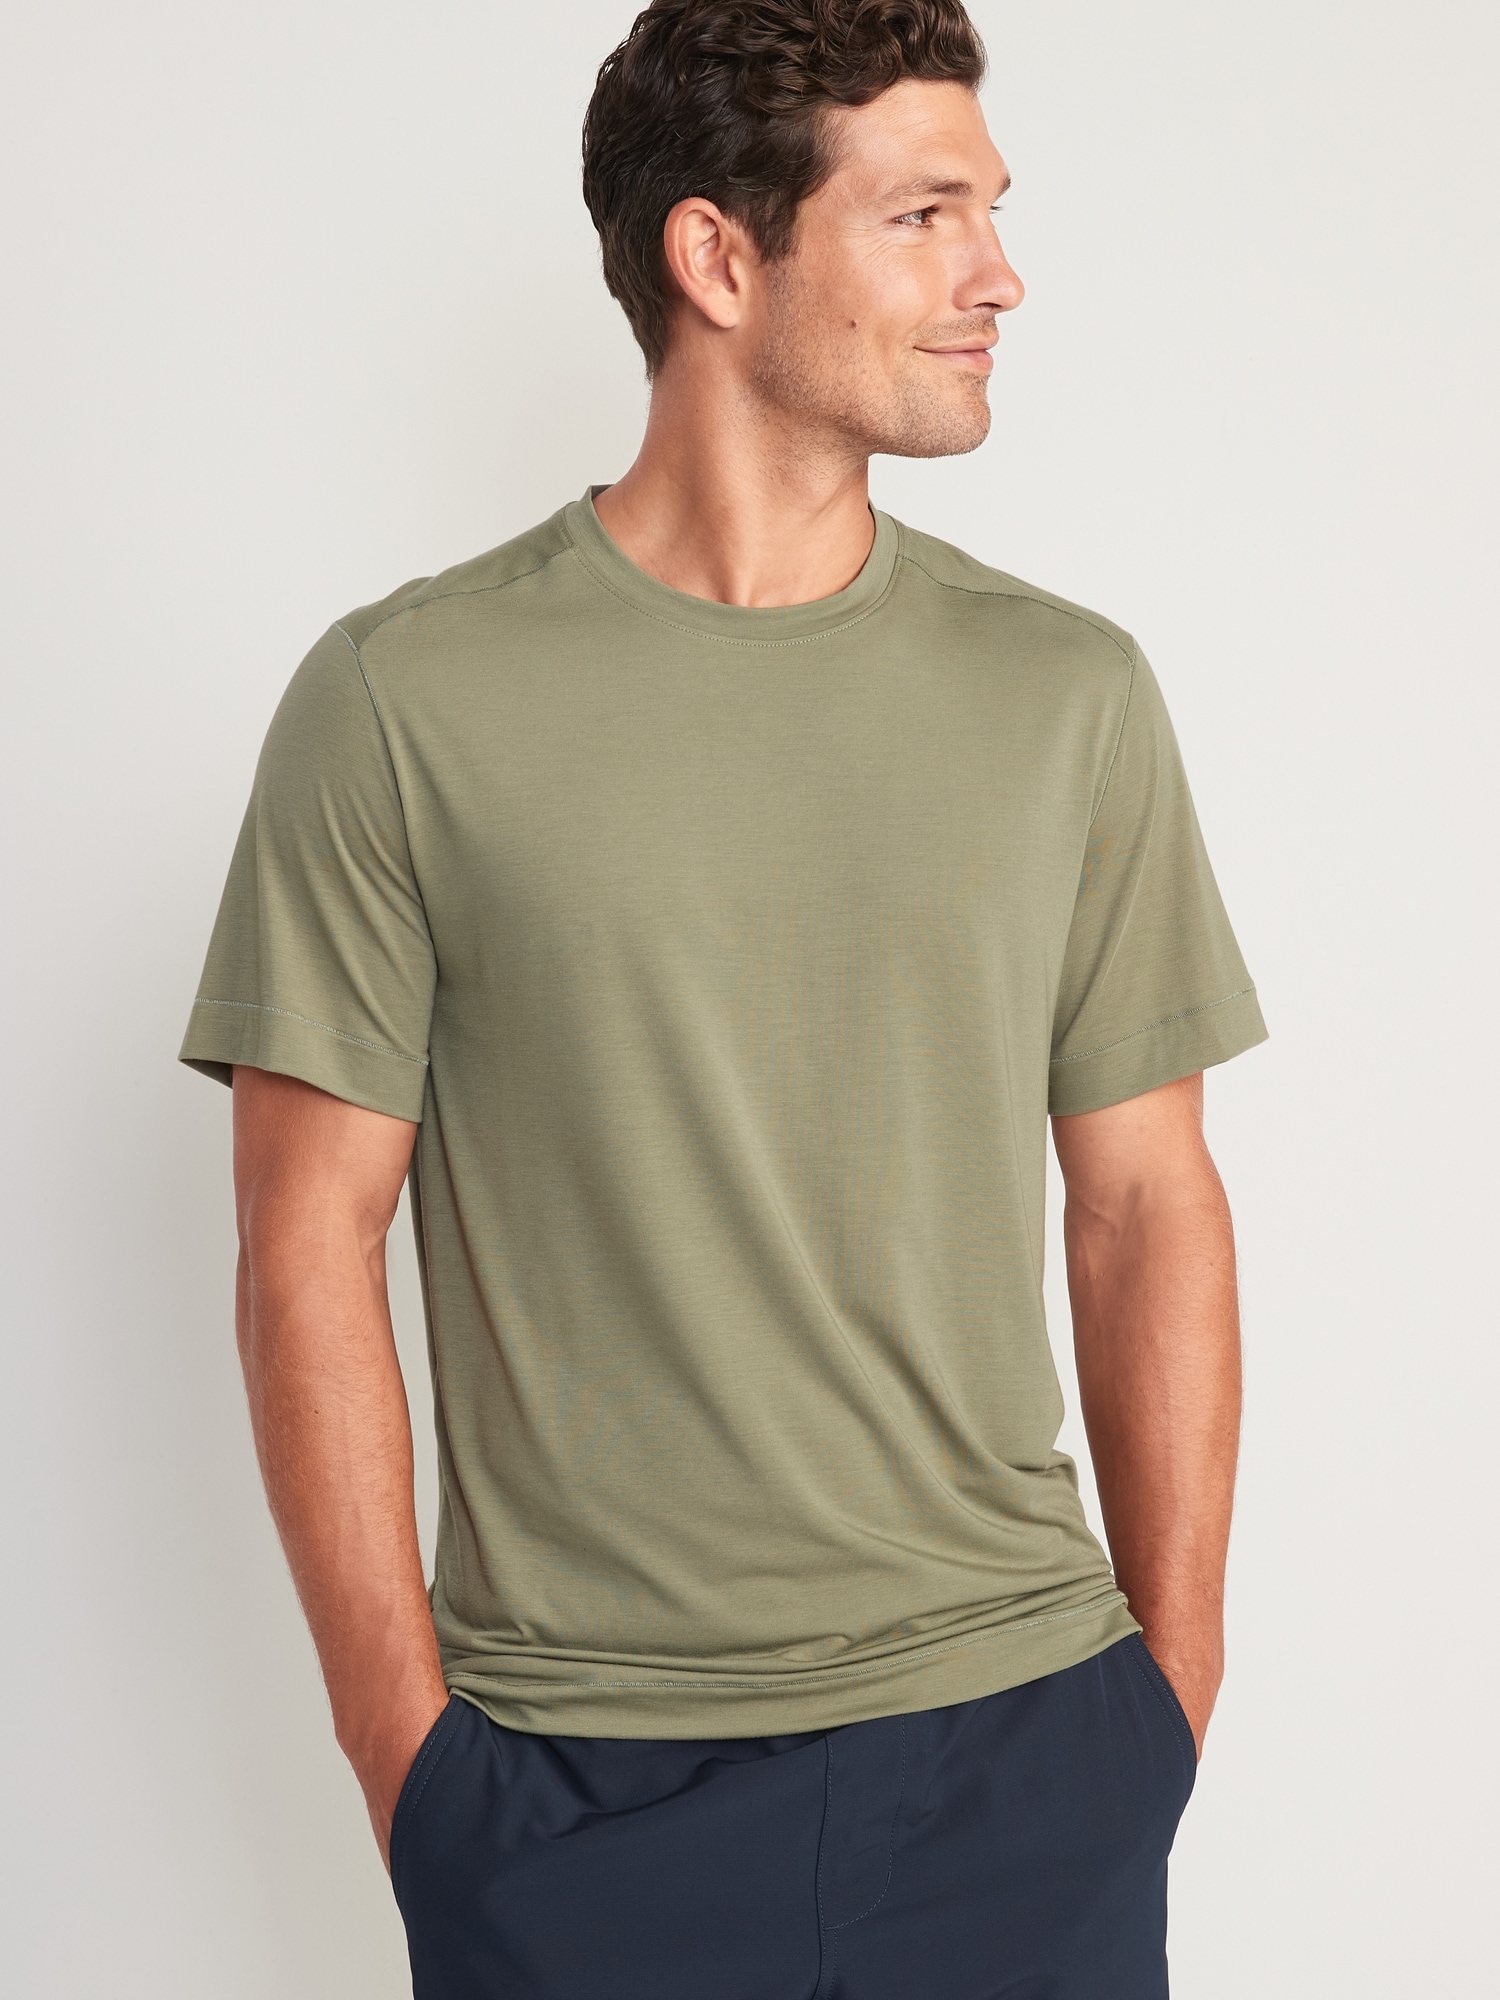 Old Navy Men's Beyond 4-Way Stretch T-Shirt - - Size M